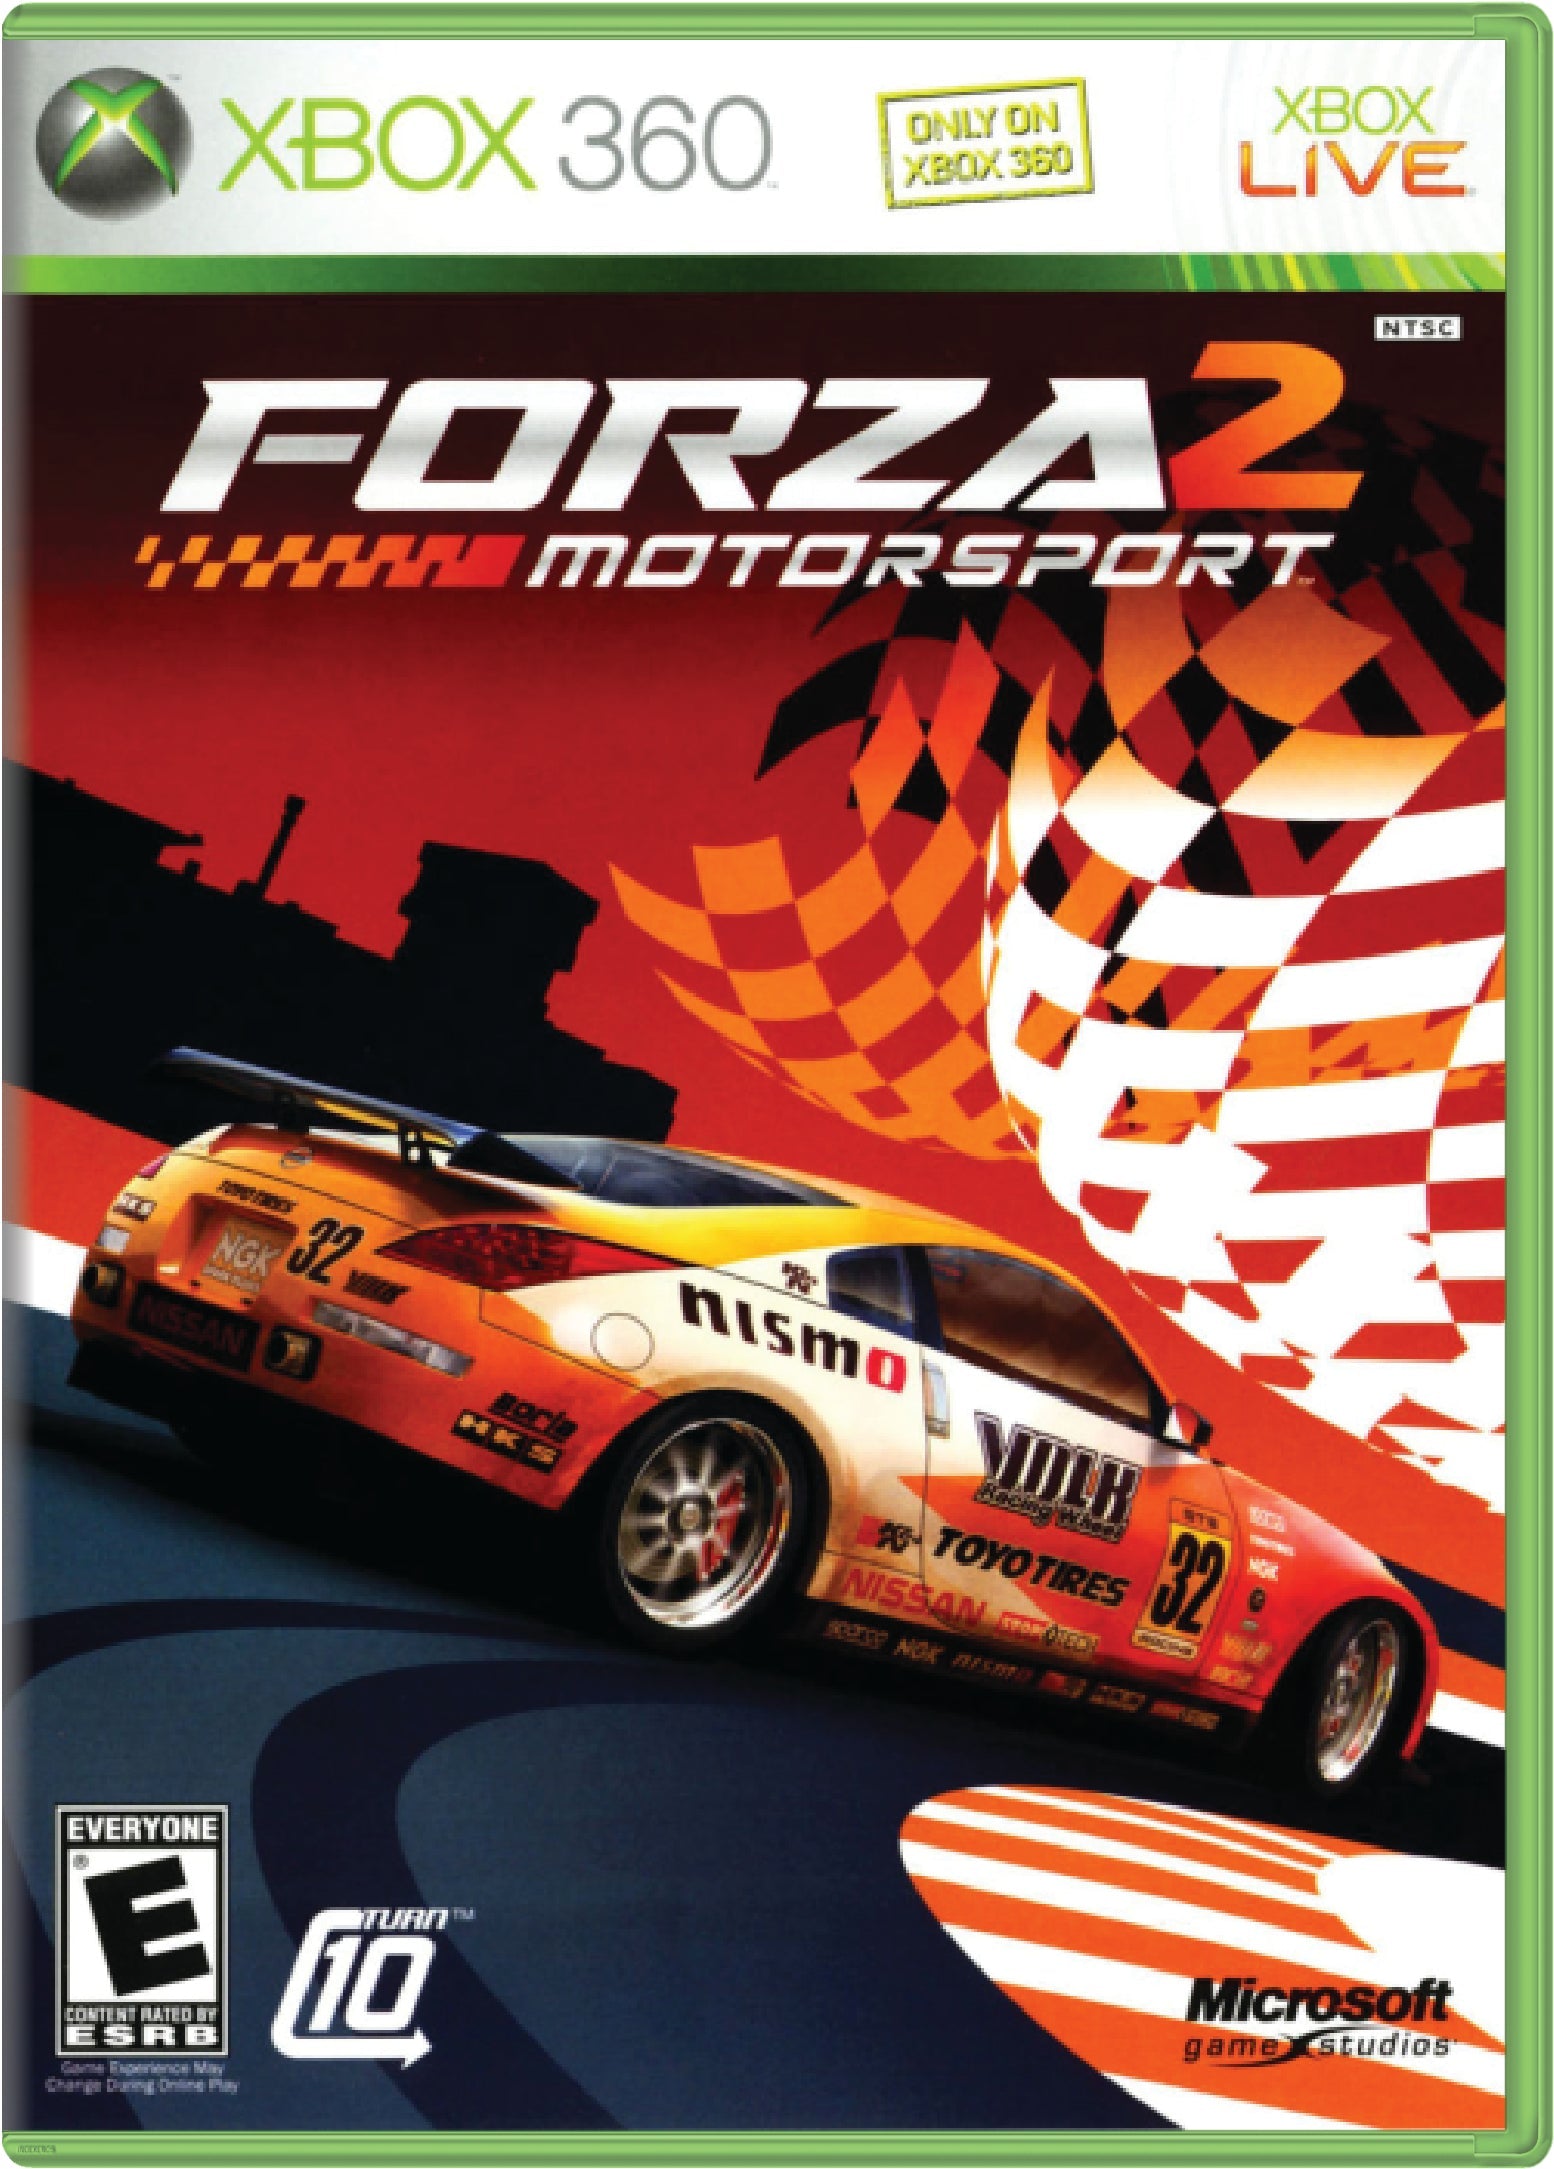 Forza Motorsport 2 Cover Art